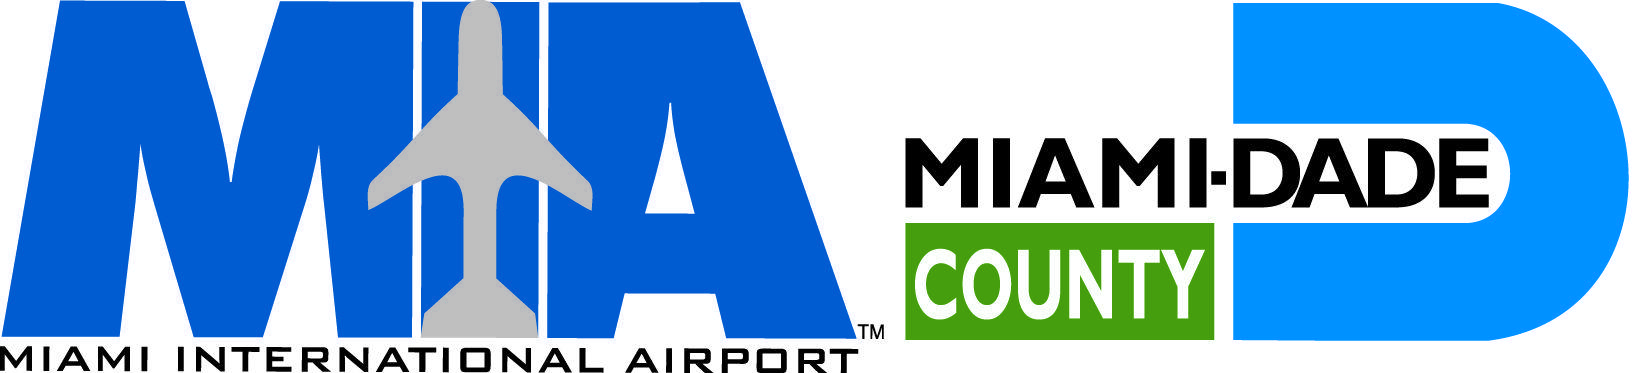 Miami International Airport Logo - Customer Service - Miami International Airport